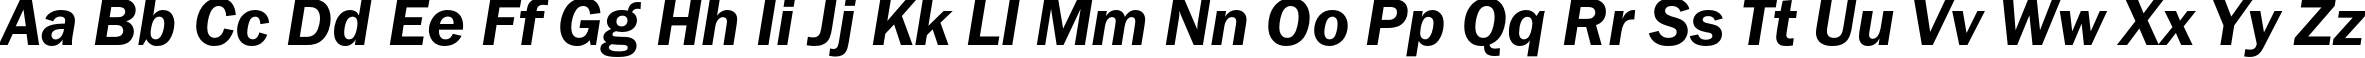 Пример написания английского алфавита шрифтом FranklinGothicDemiC Italic